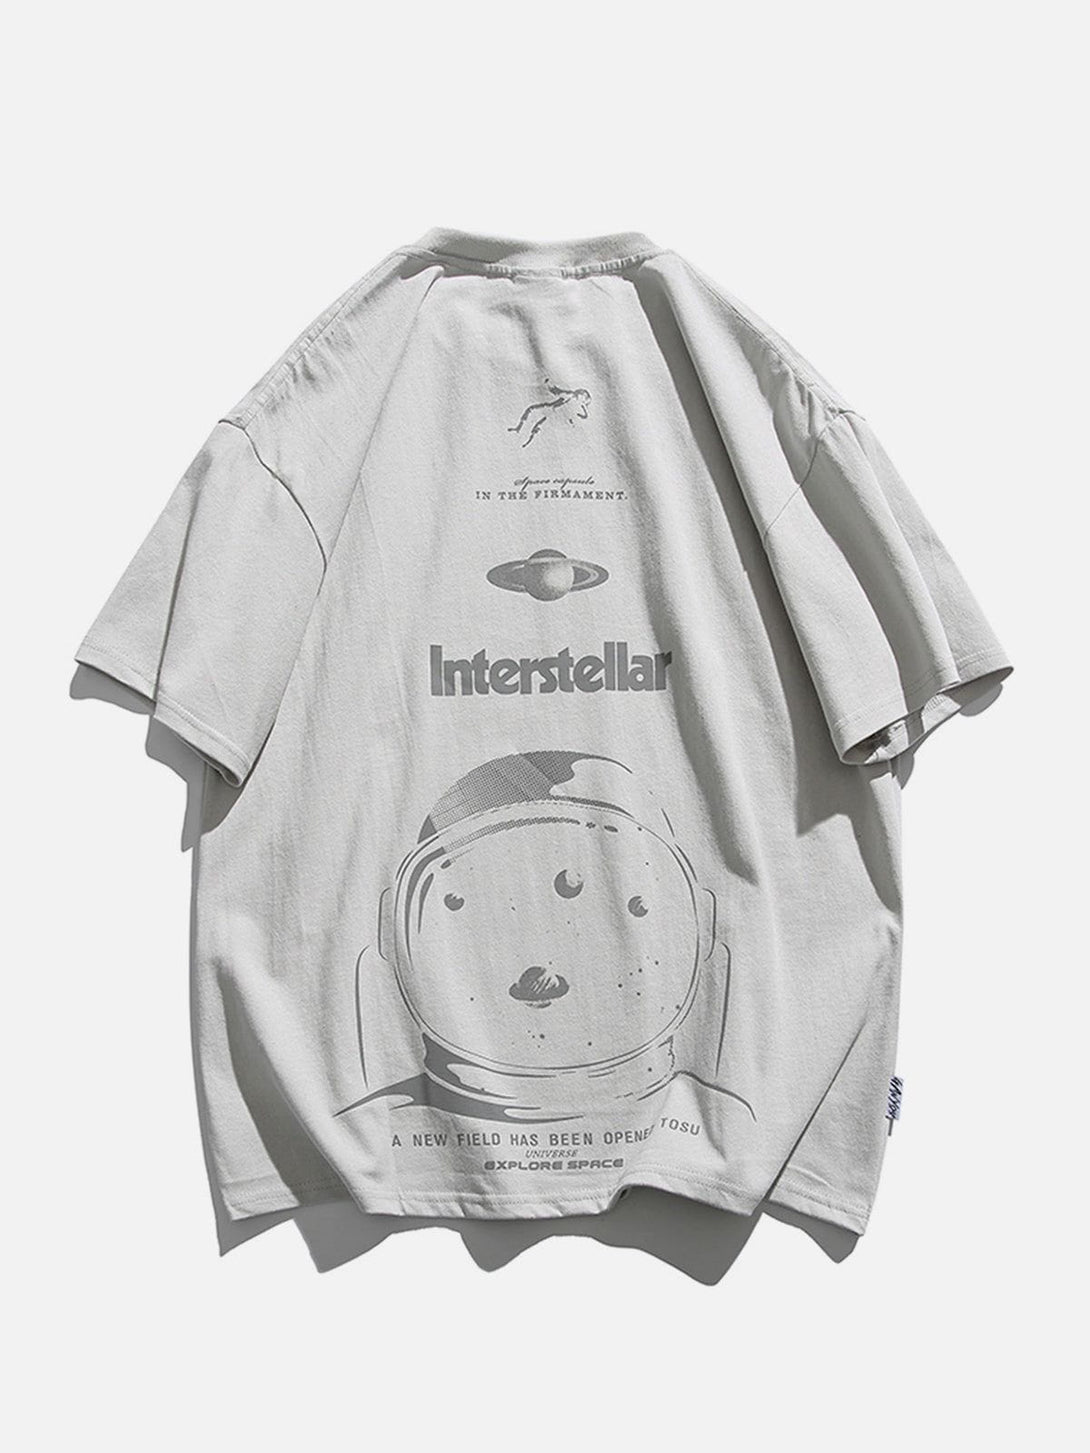 Majesda® - Pure Cotton Astronaut Space Print Graphic Tee- Outfit Ideas - Streetwear Fashion - majesda.com